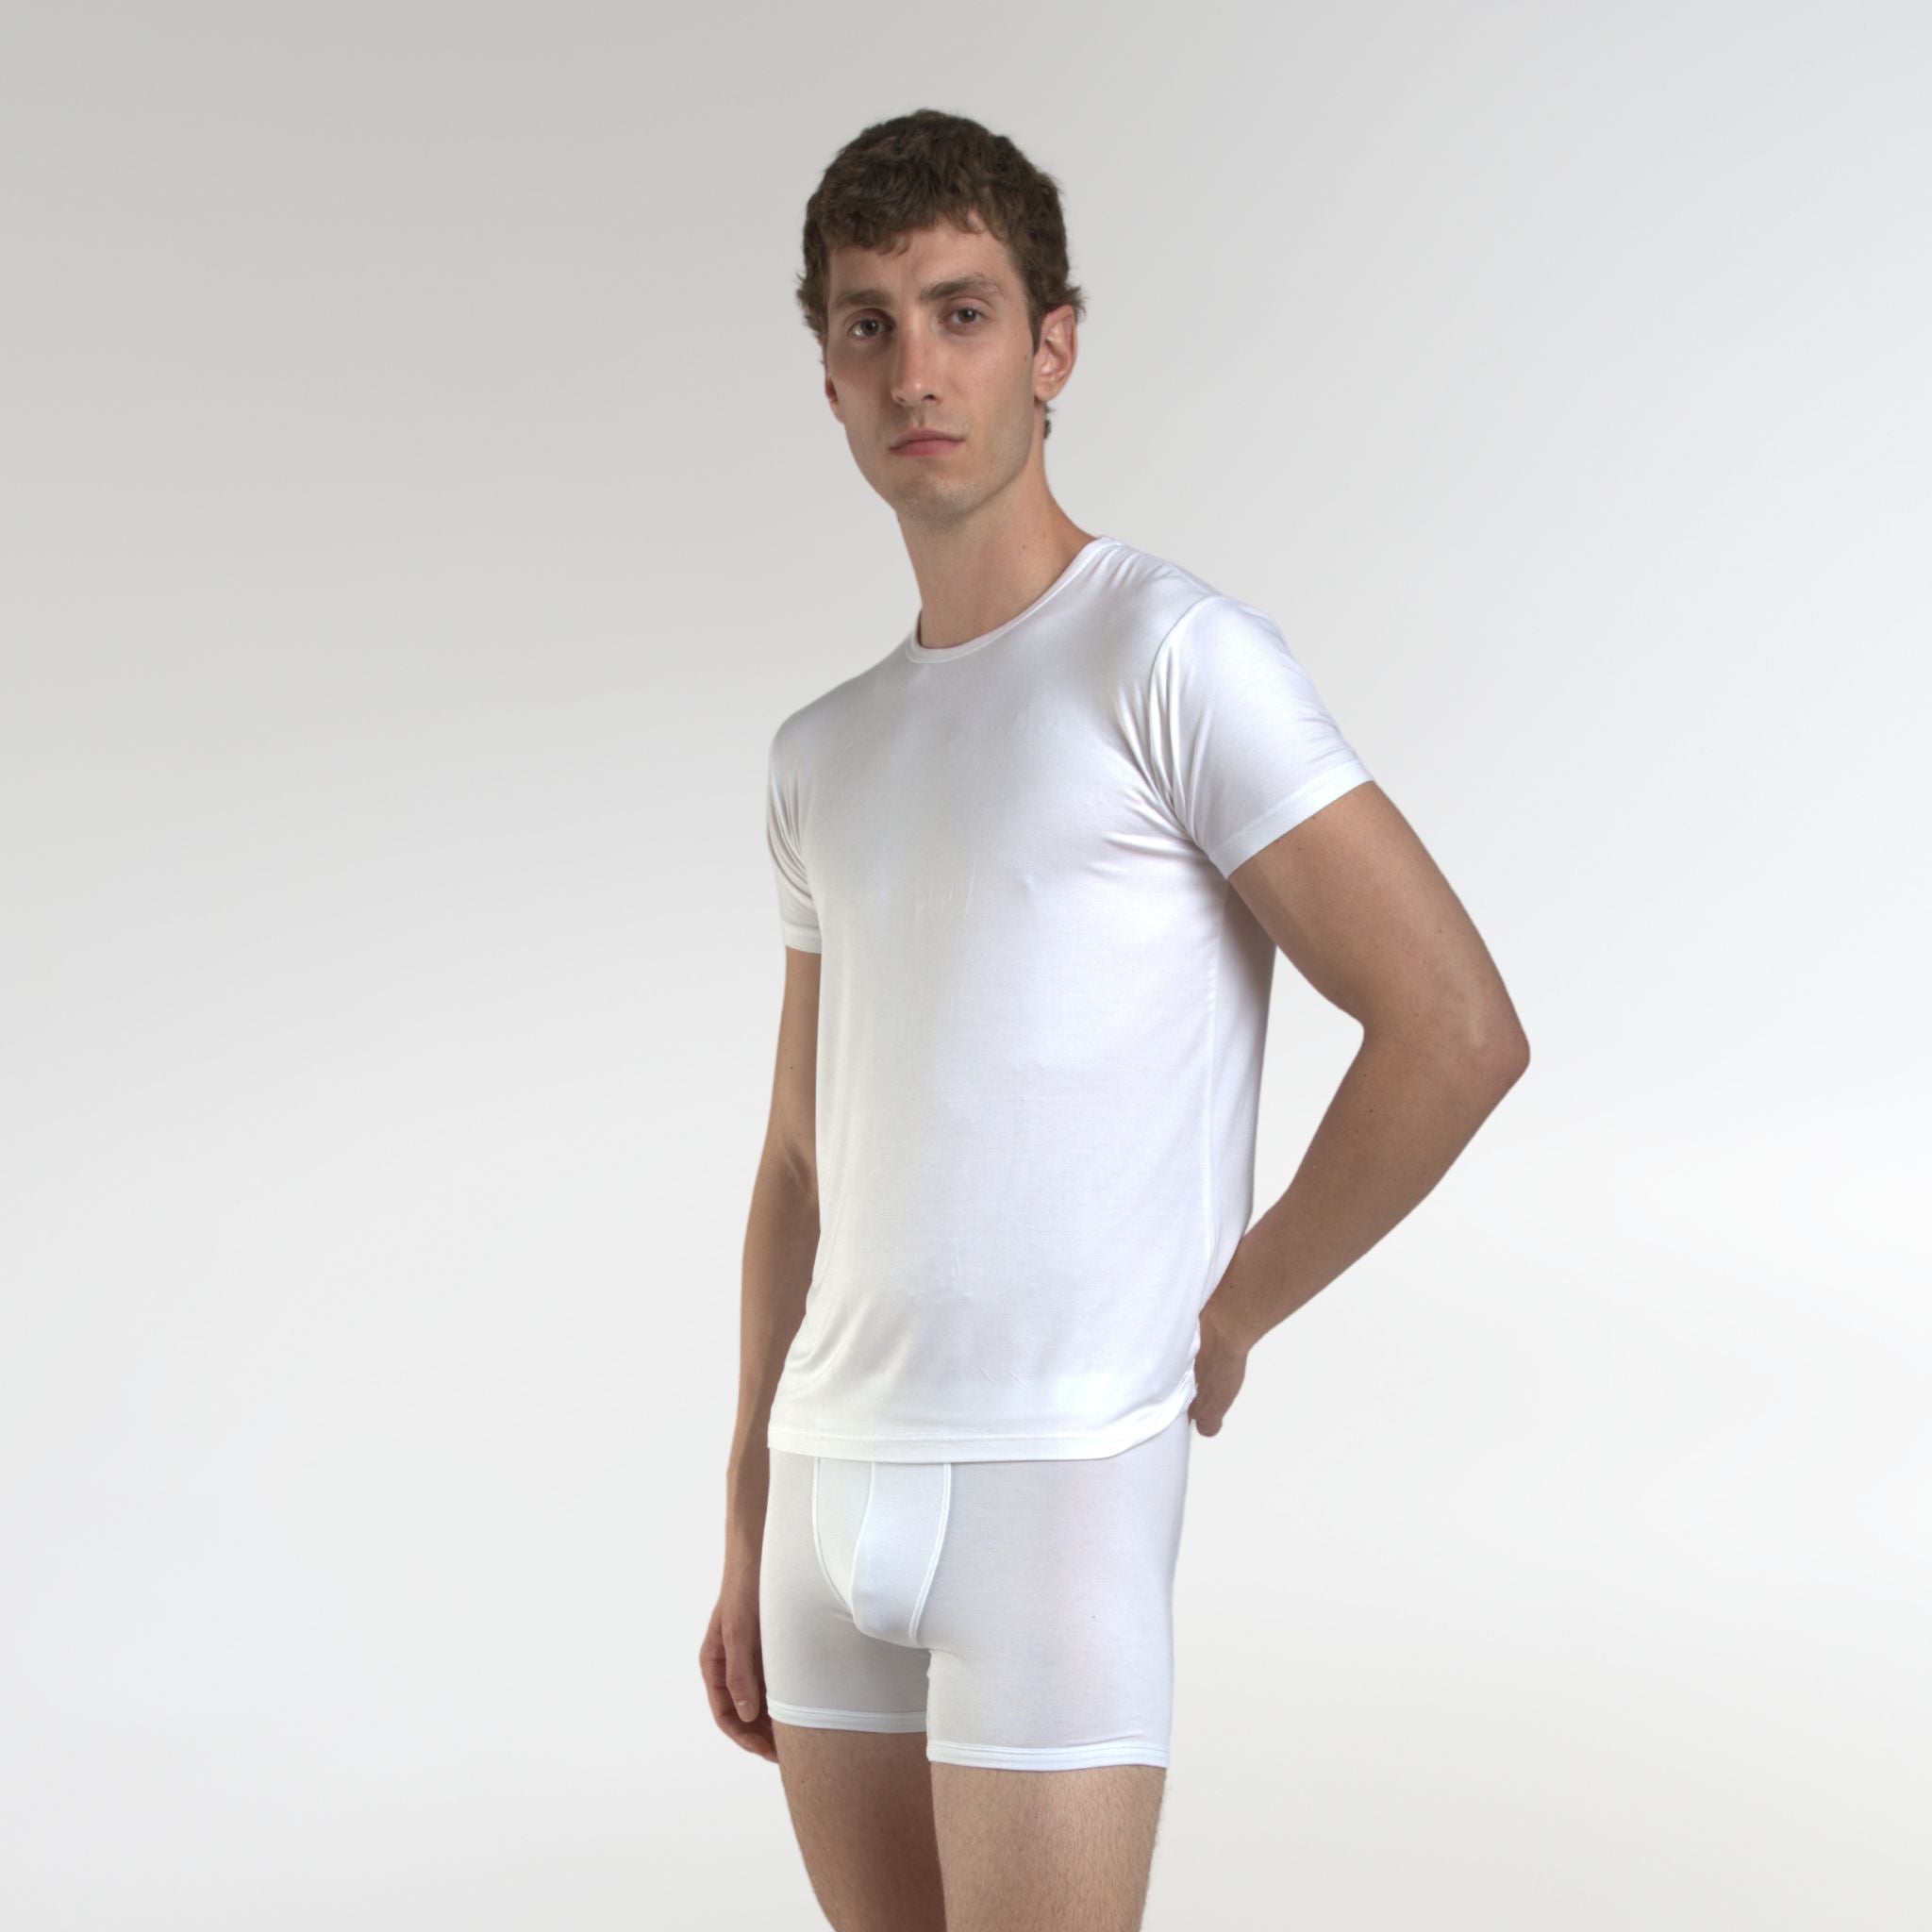 high-quality silk undershirt for men white